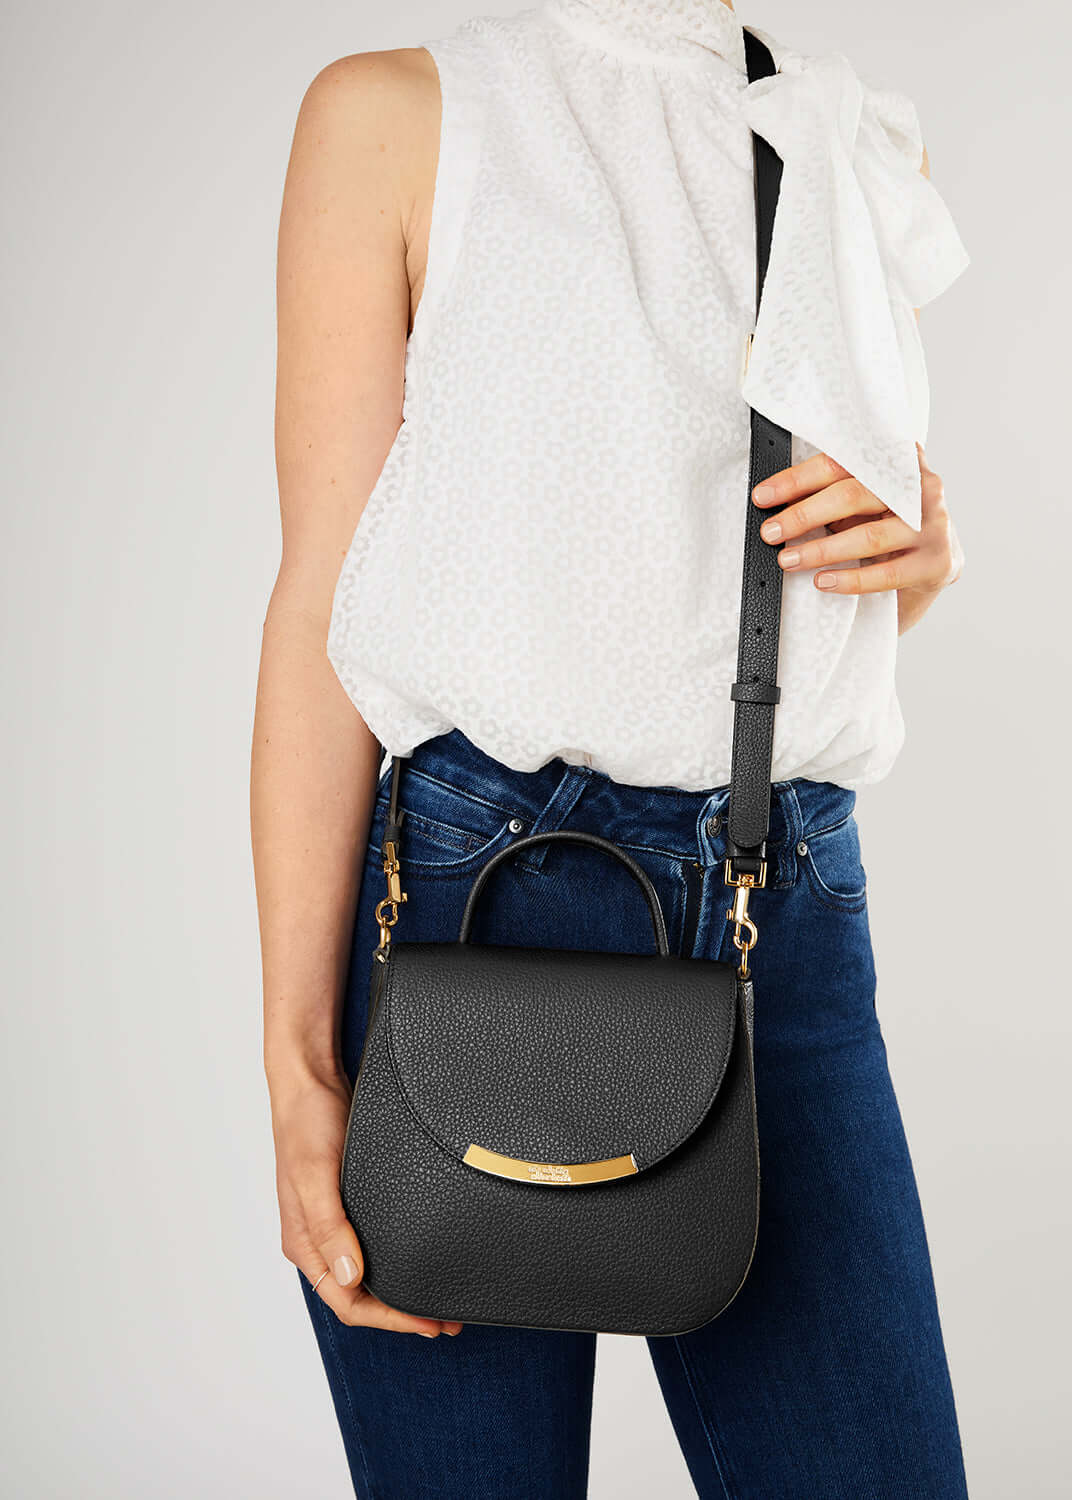 ladies leather handbag in black, miniature sized crossbody strap